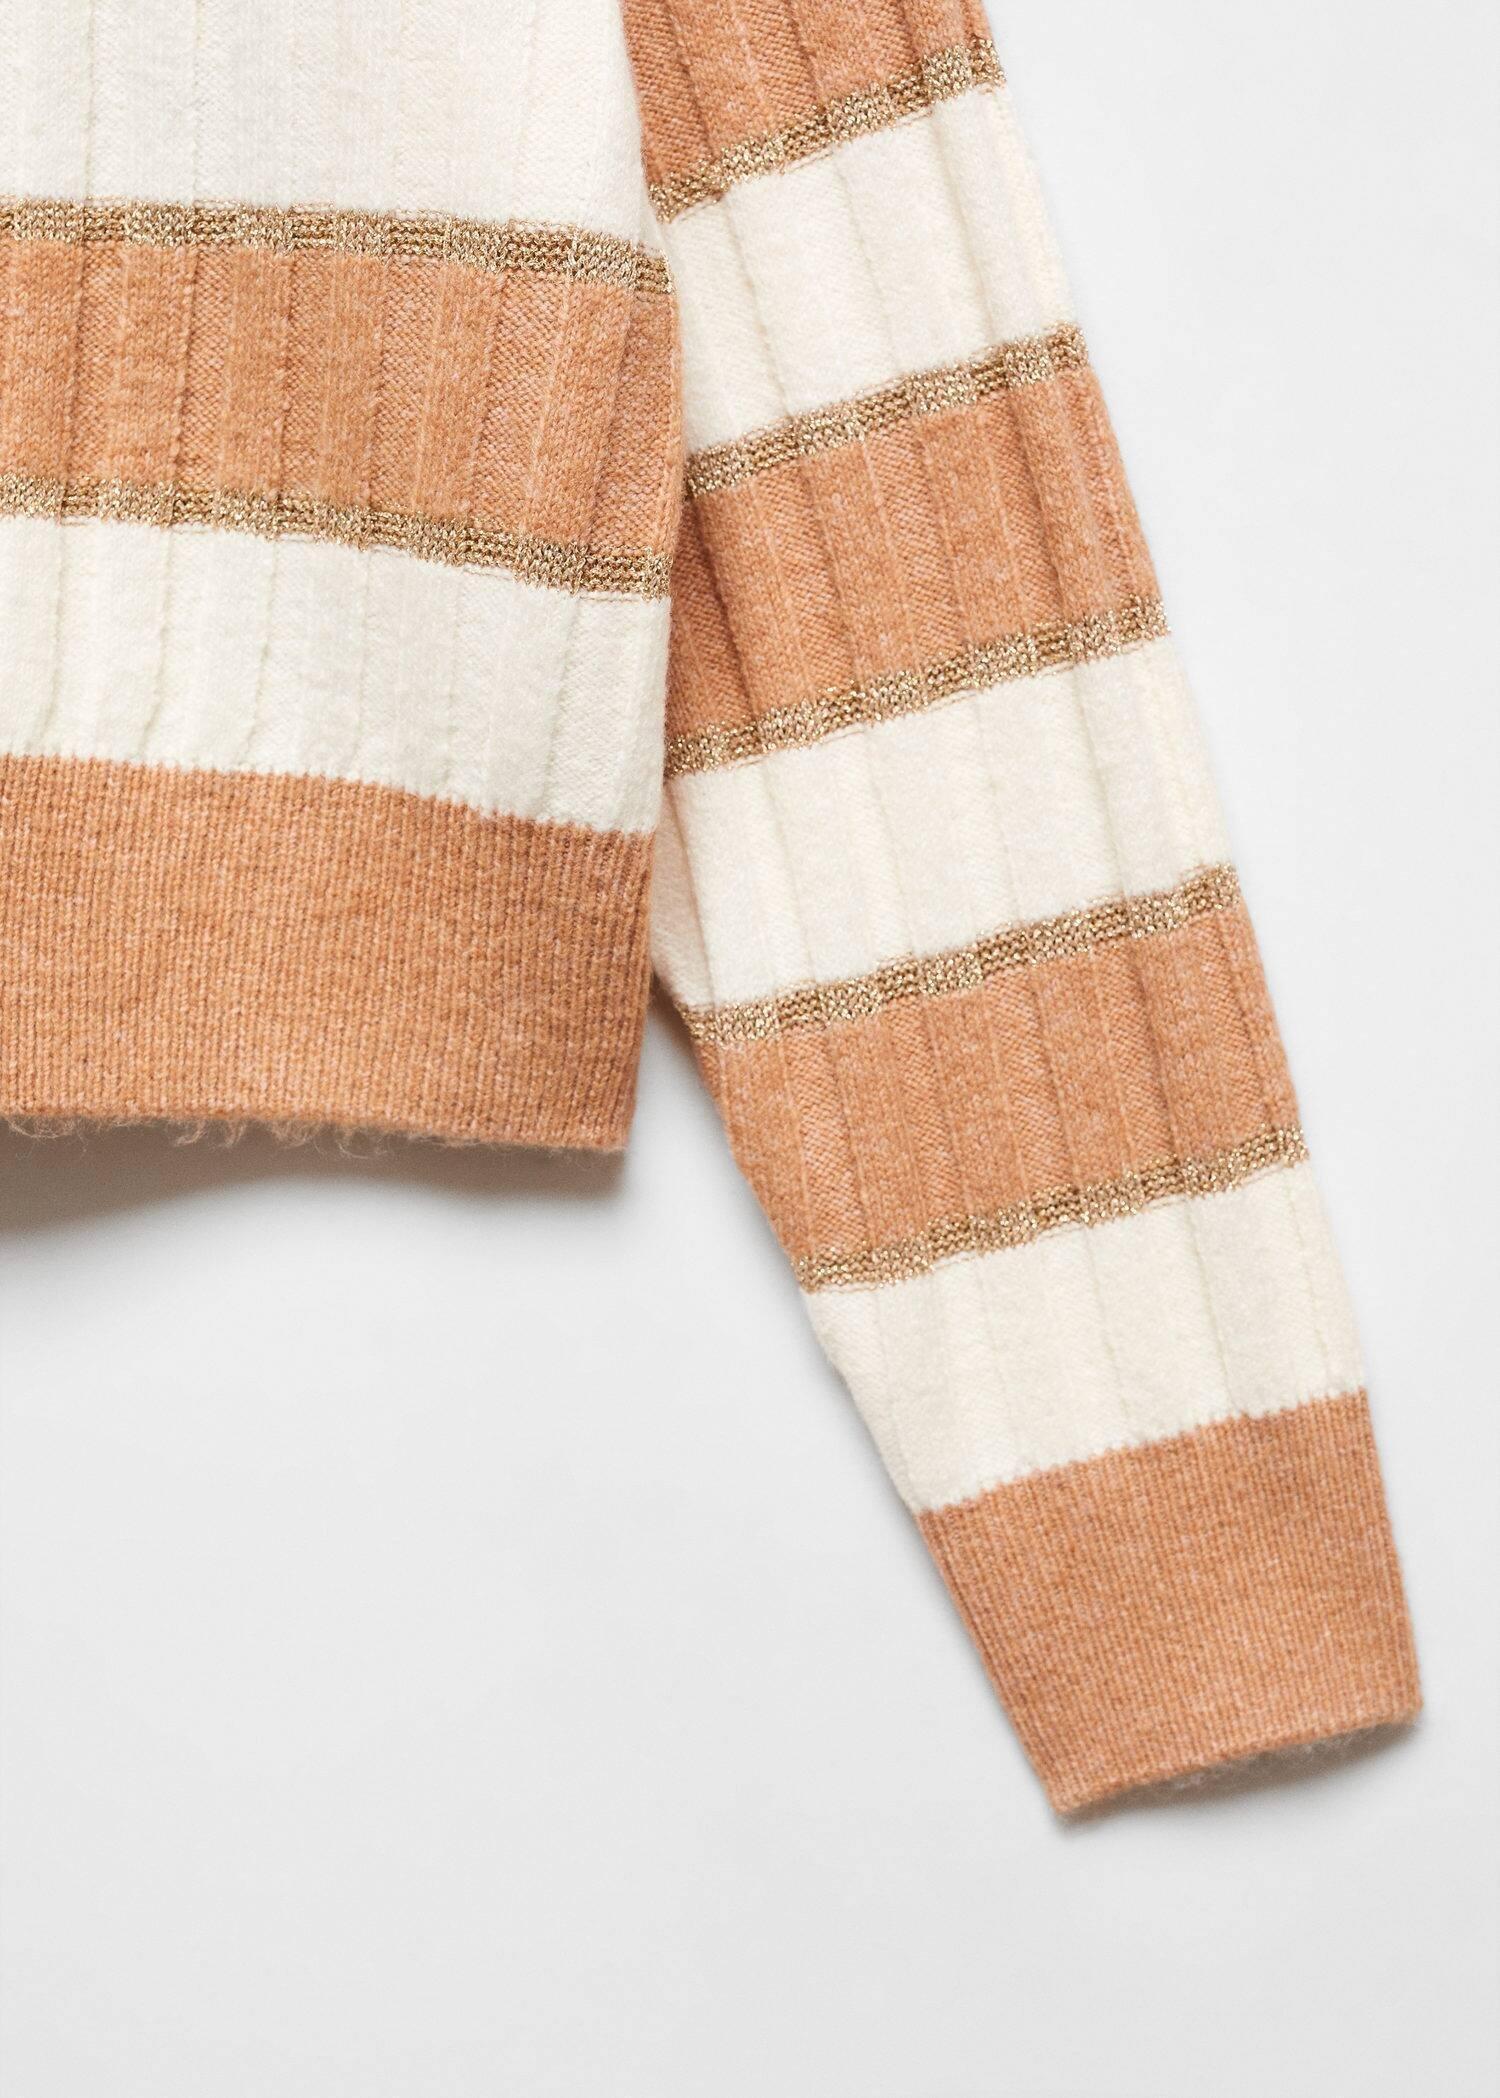 Mango - Brown Lurex Detail Striped Sweater